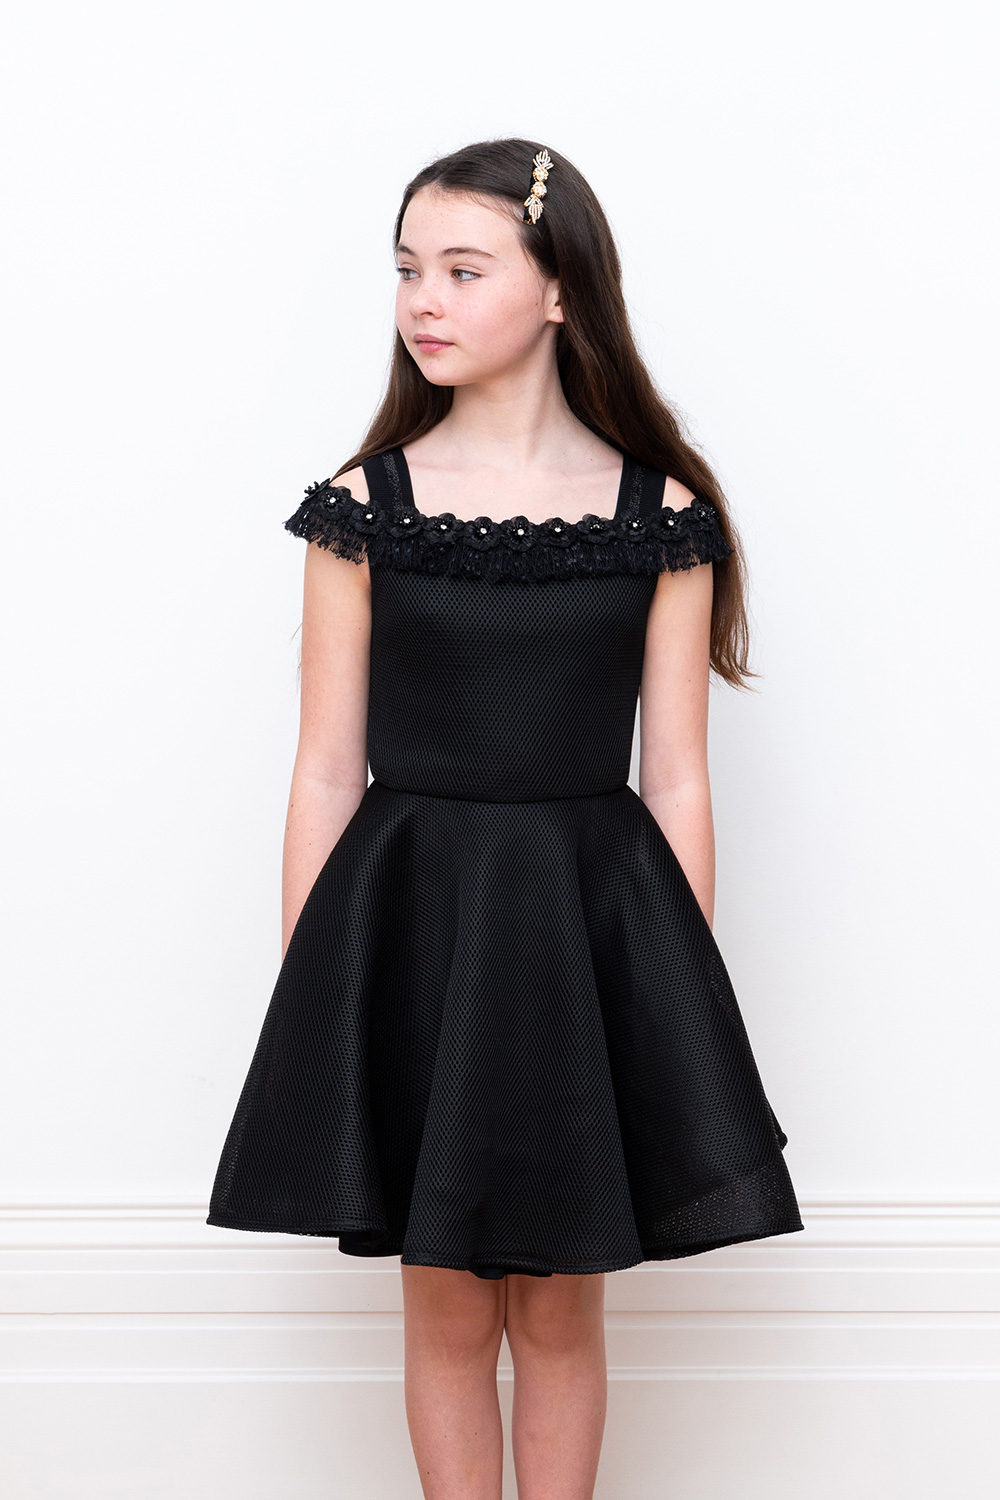 Kids Teen Children Girls Fashion Butterfly Ruched Off Shoulder Princess  Dress | eBay